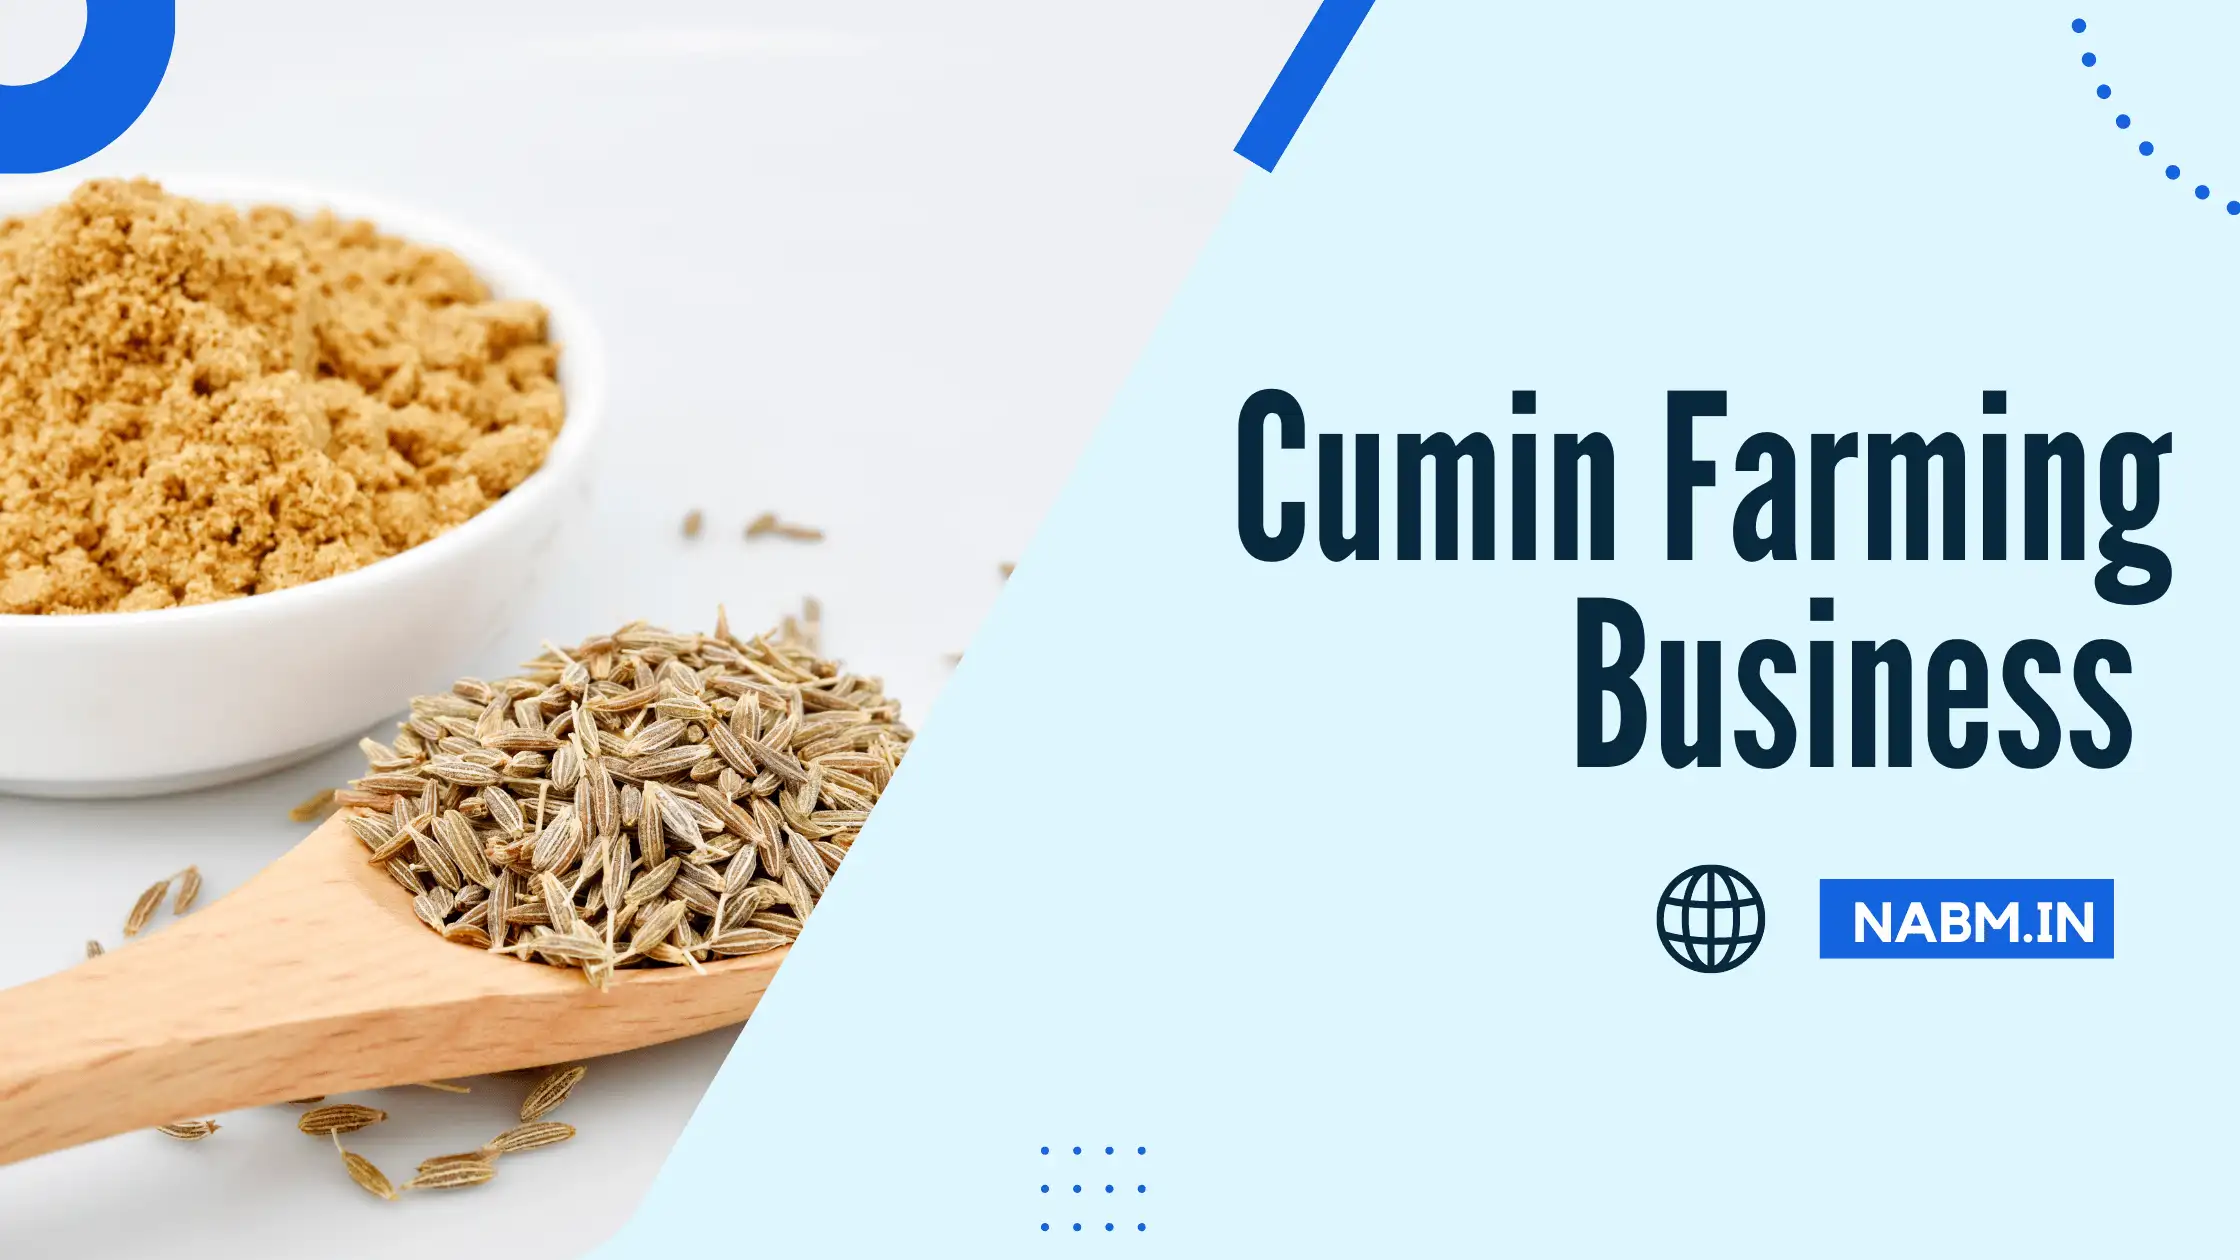 Cumin Farming Business - How to start cumin farming.